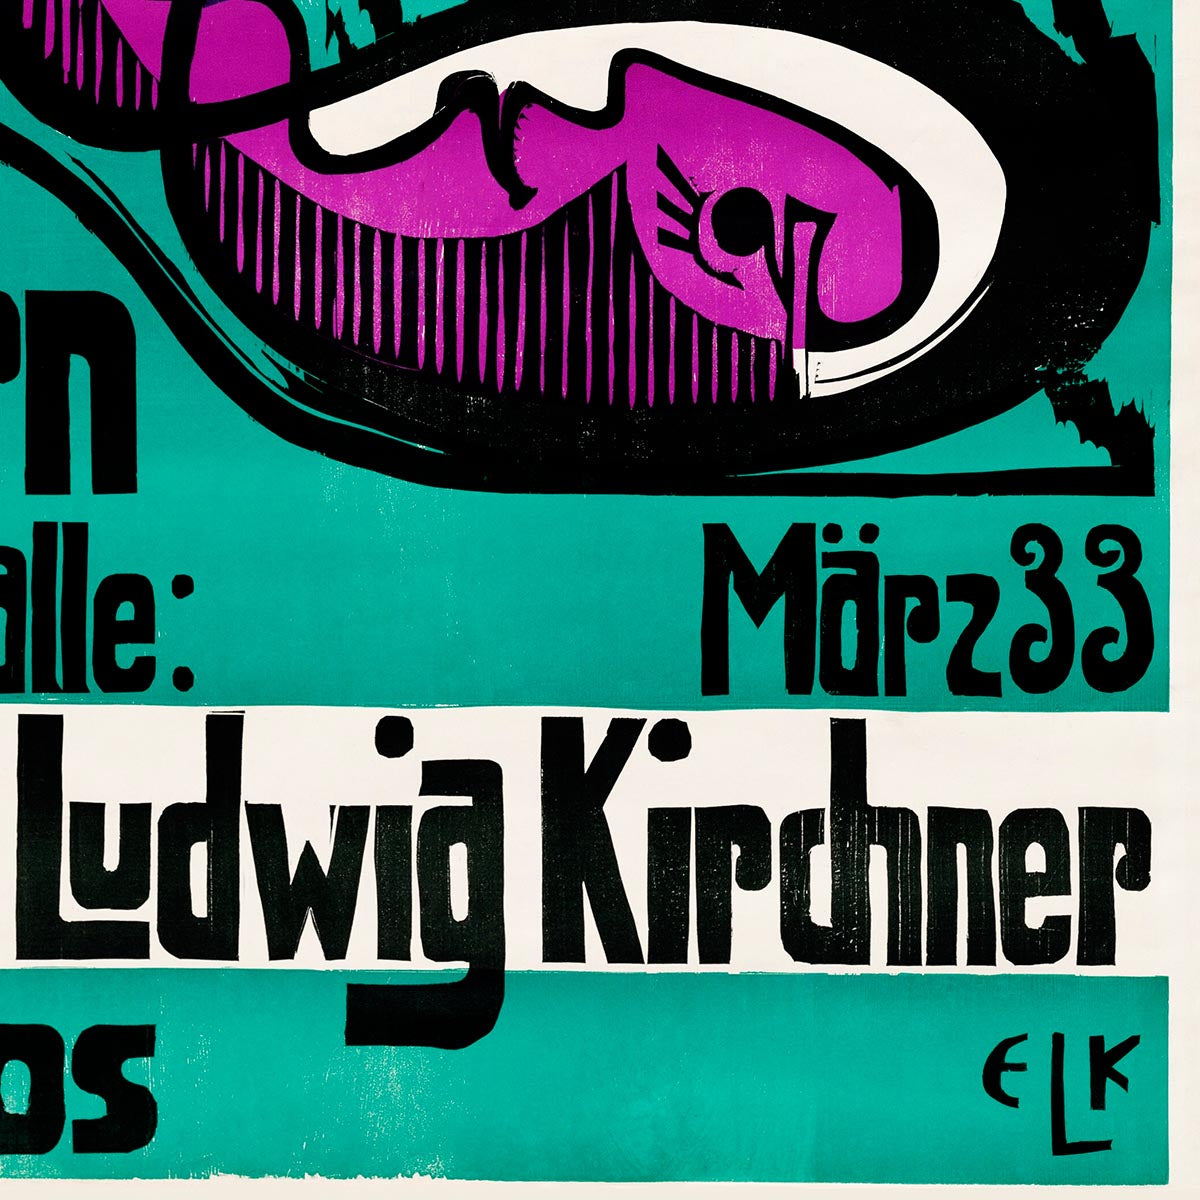 Bern Kunsthalle - Ernst Kirchner Exhibition Poster